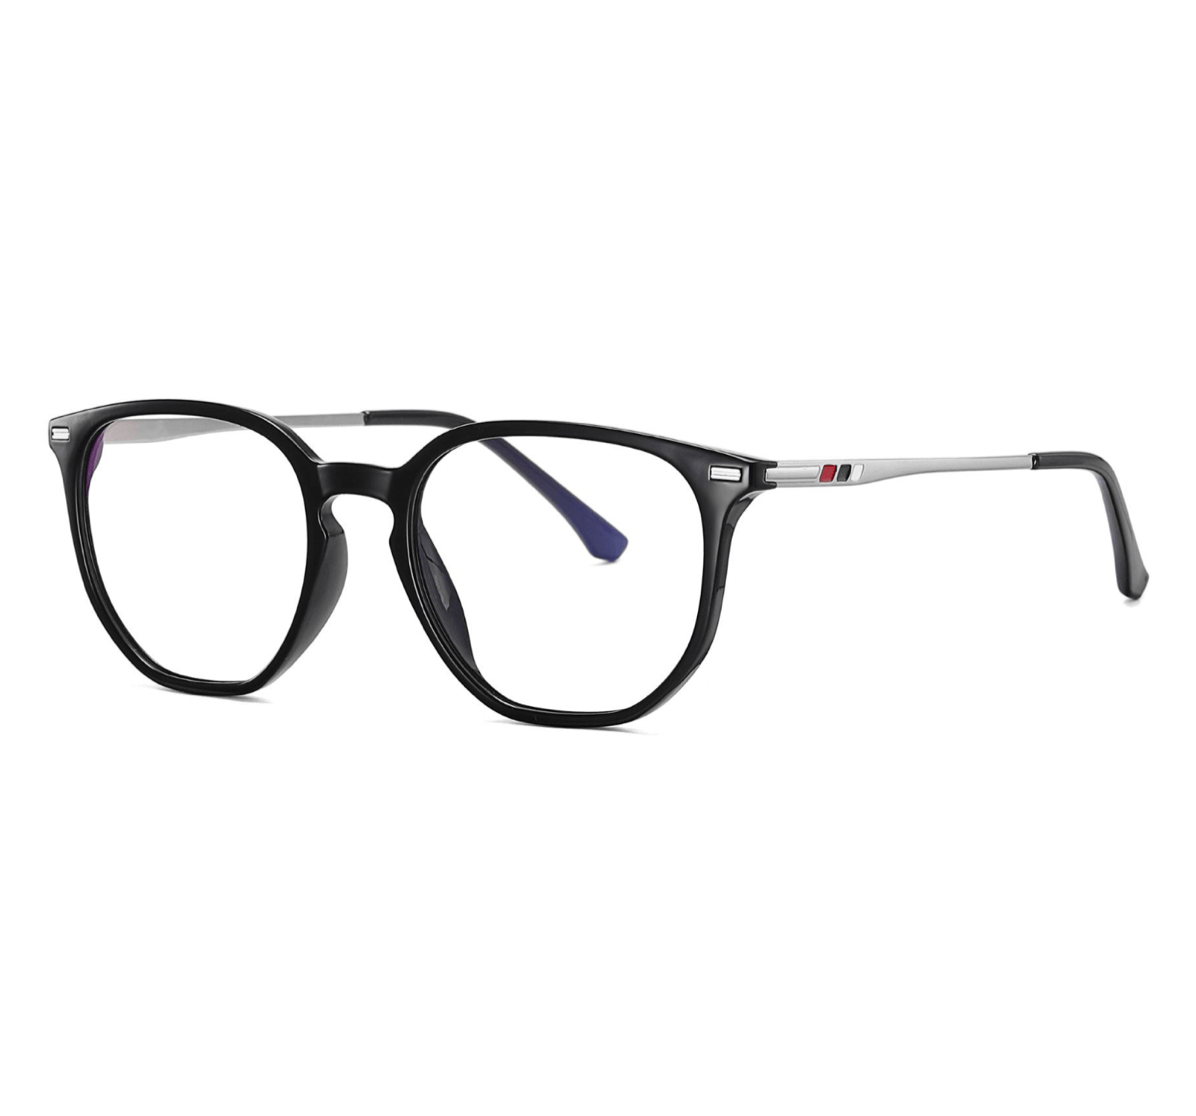 Trendy metal + TR90 blue light glasses bulk, wholesale blue light glasses, blue light glasses supplier, blue light glasses China